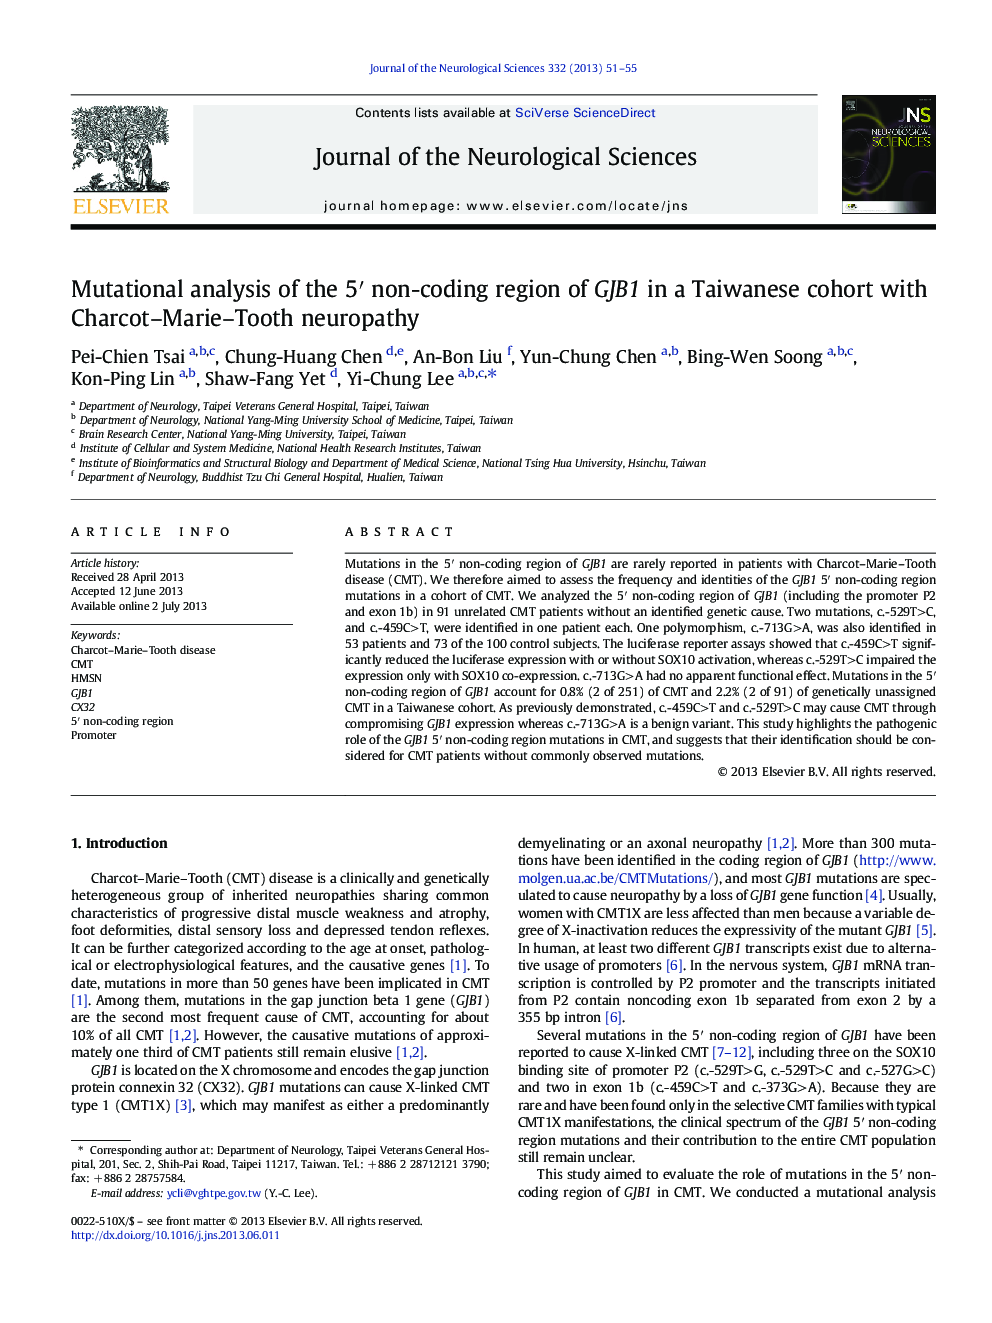 Mutational analysis of the 5â² non-coding region of GJB1 in a Taiwanese cohort with Charcot-Marie-Tooth neuropathy